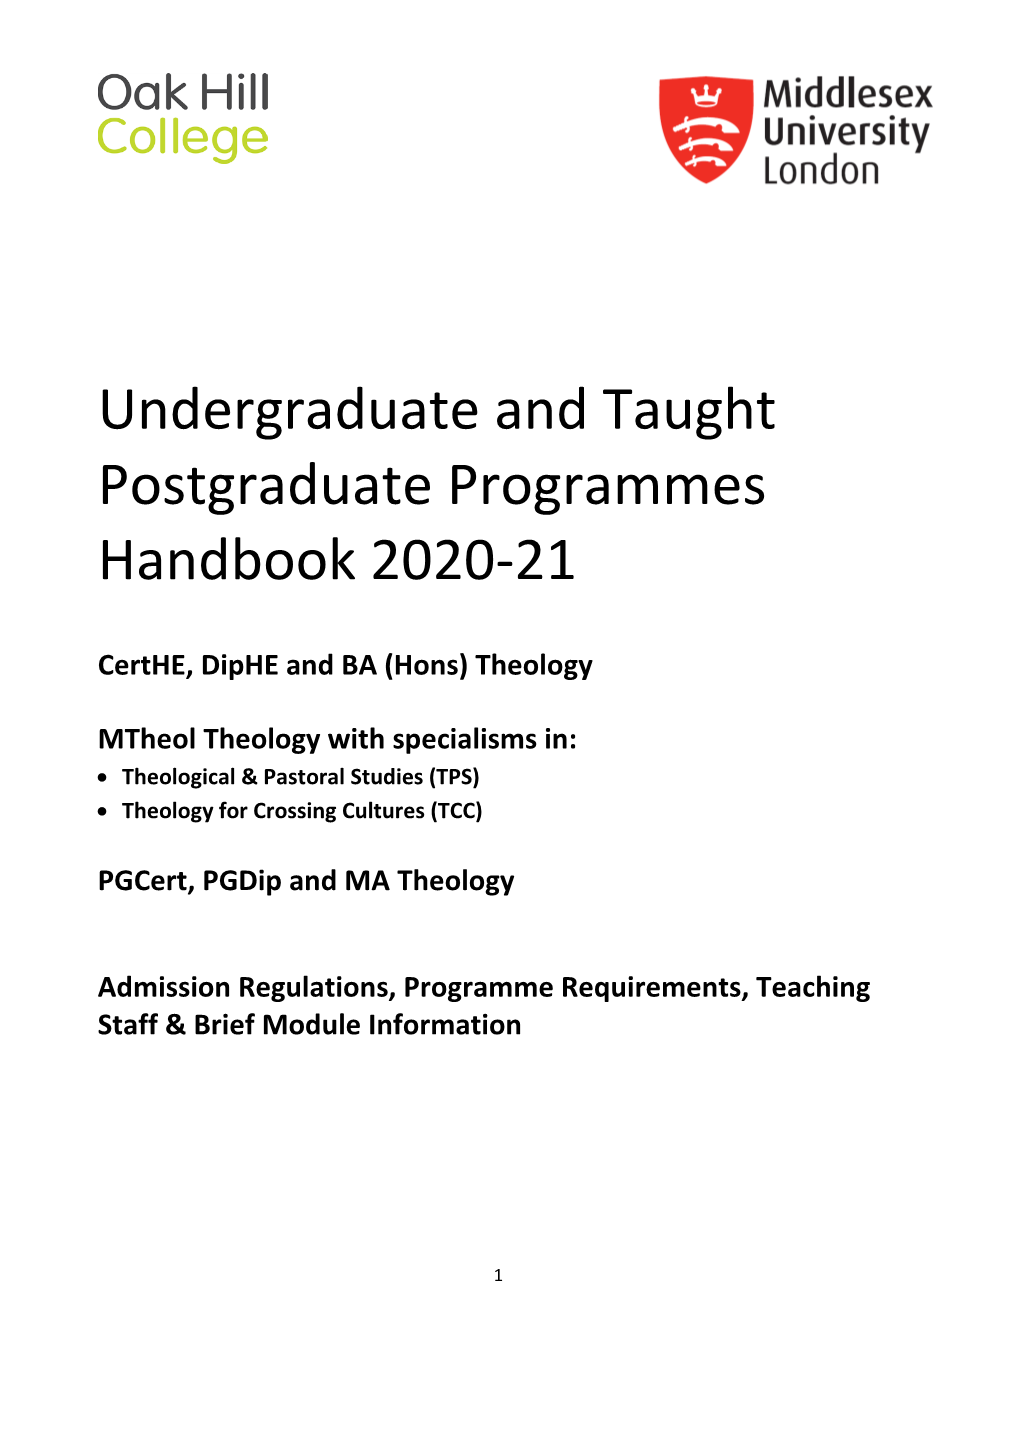 Undergraduate and Taught Postgraduate Programmes Handbook 2020-21